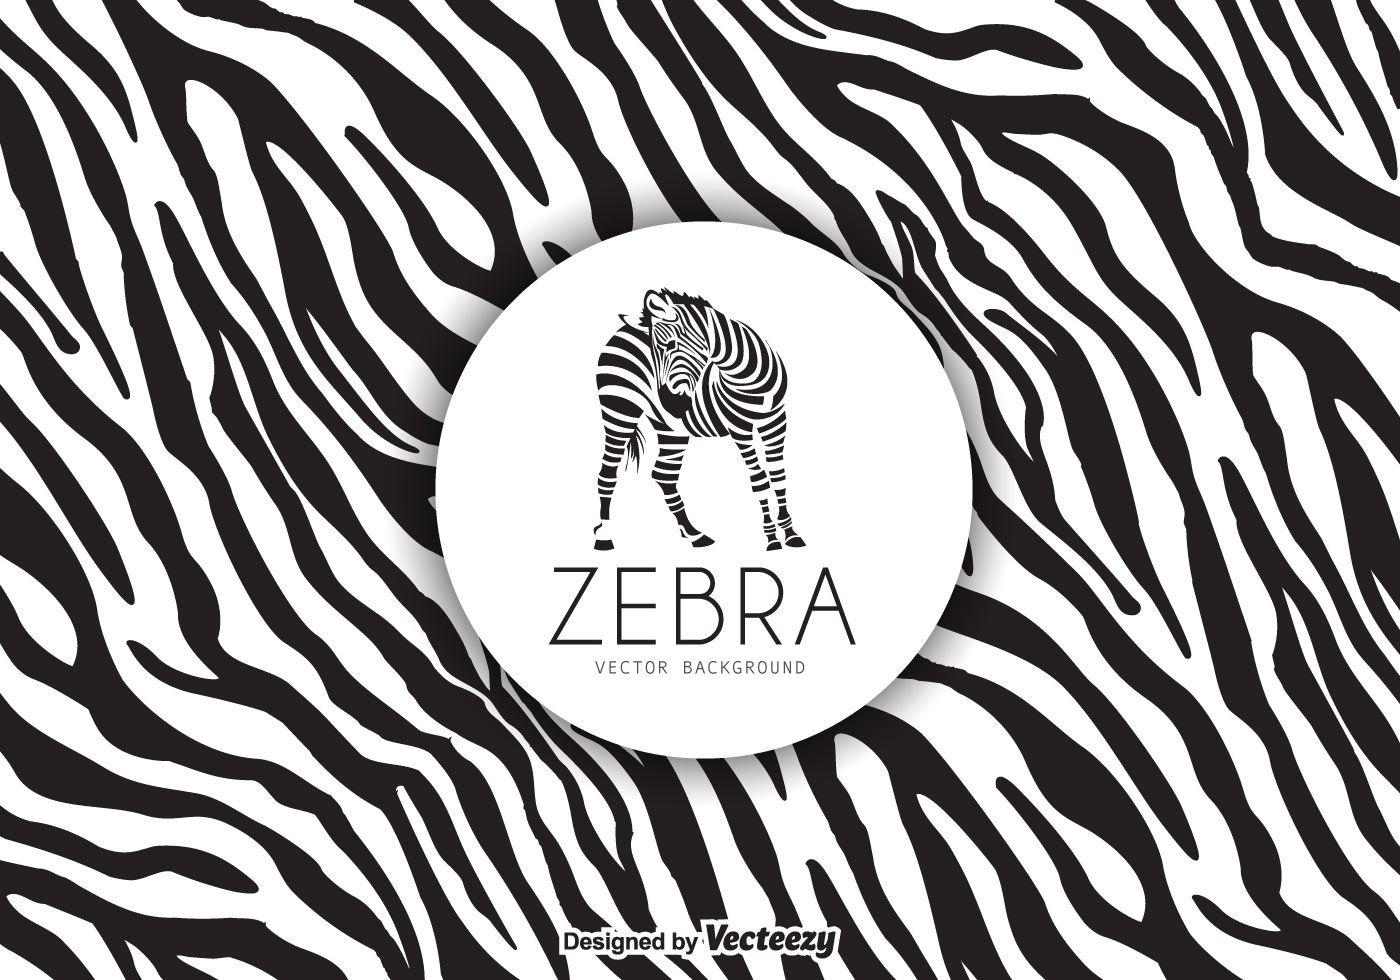 Zebra Print Background Vector Free Vector Art, Stock